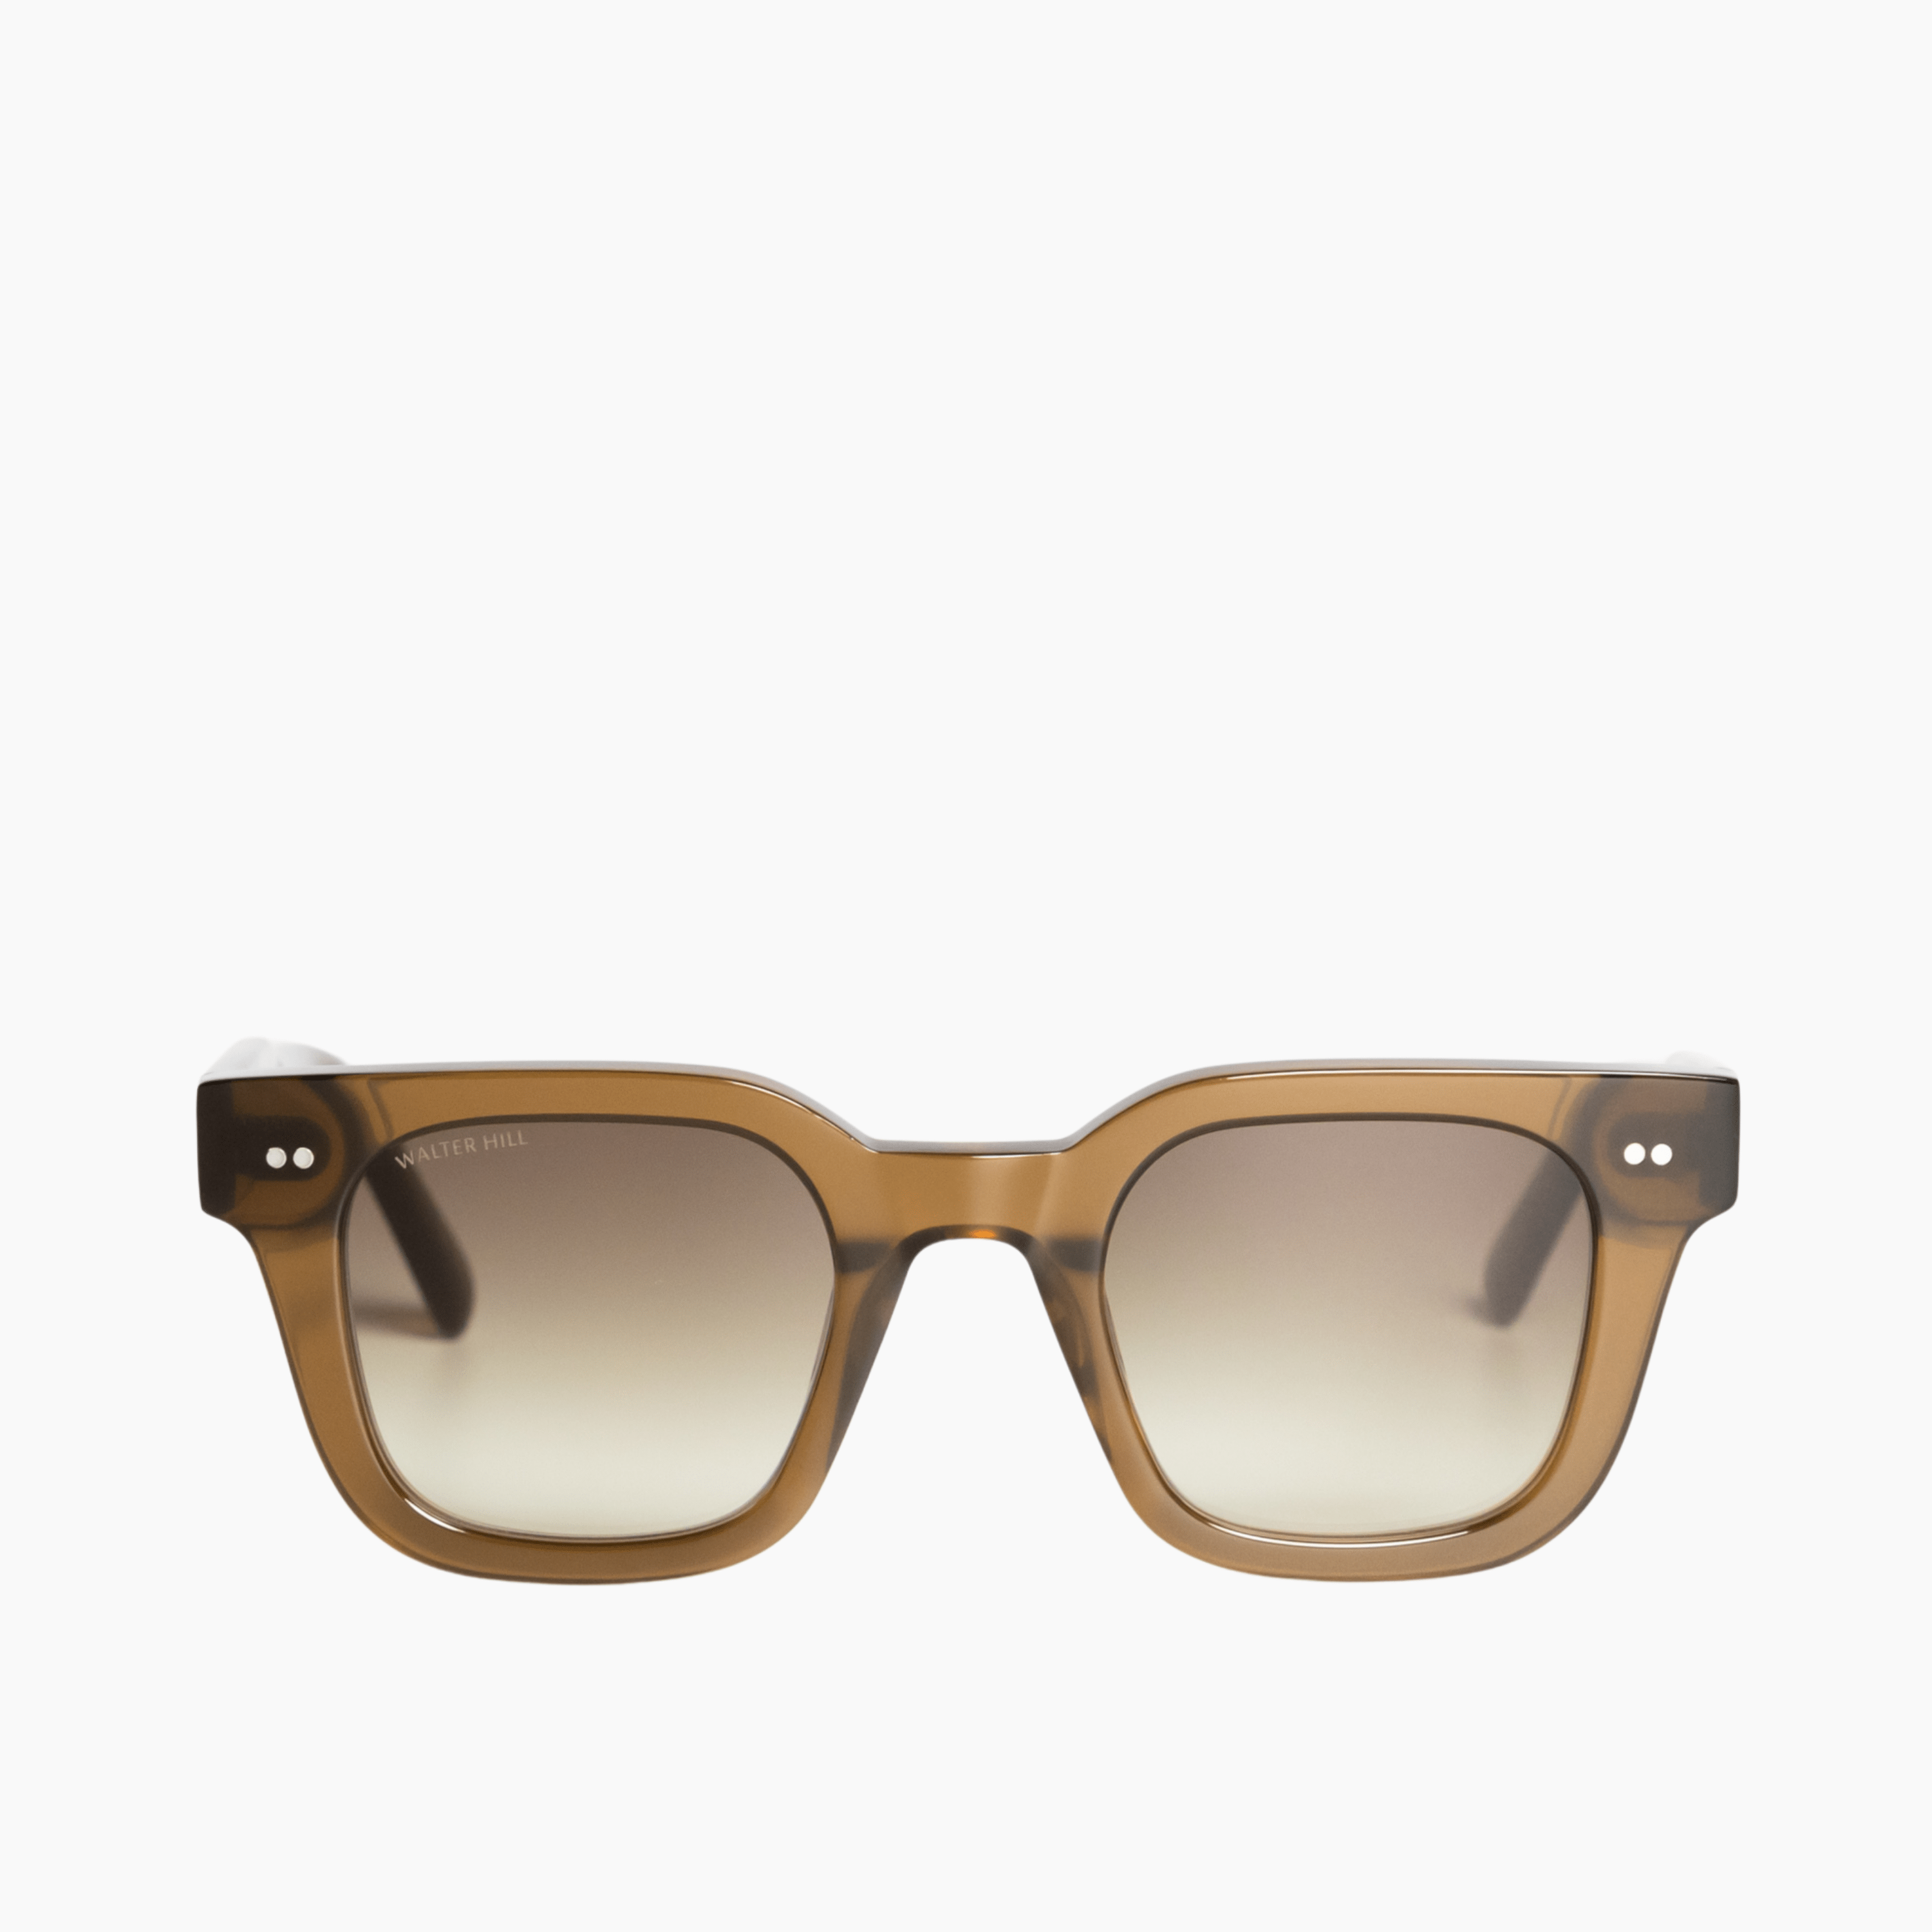 Walter Hill Sunglasses Café / Standard / Polarized Cat.3 XAVIER - CAFÉ